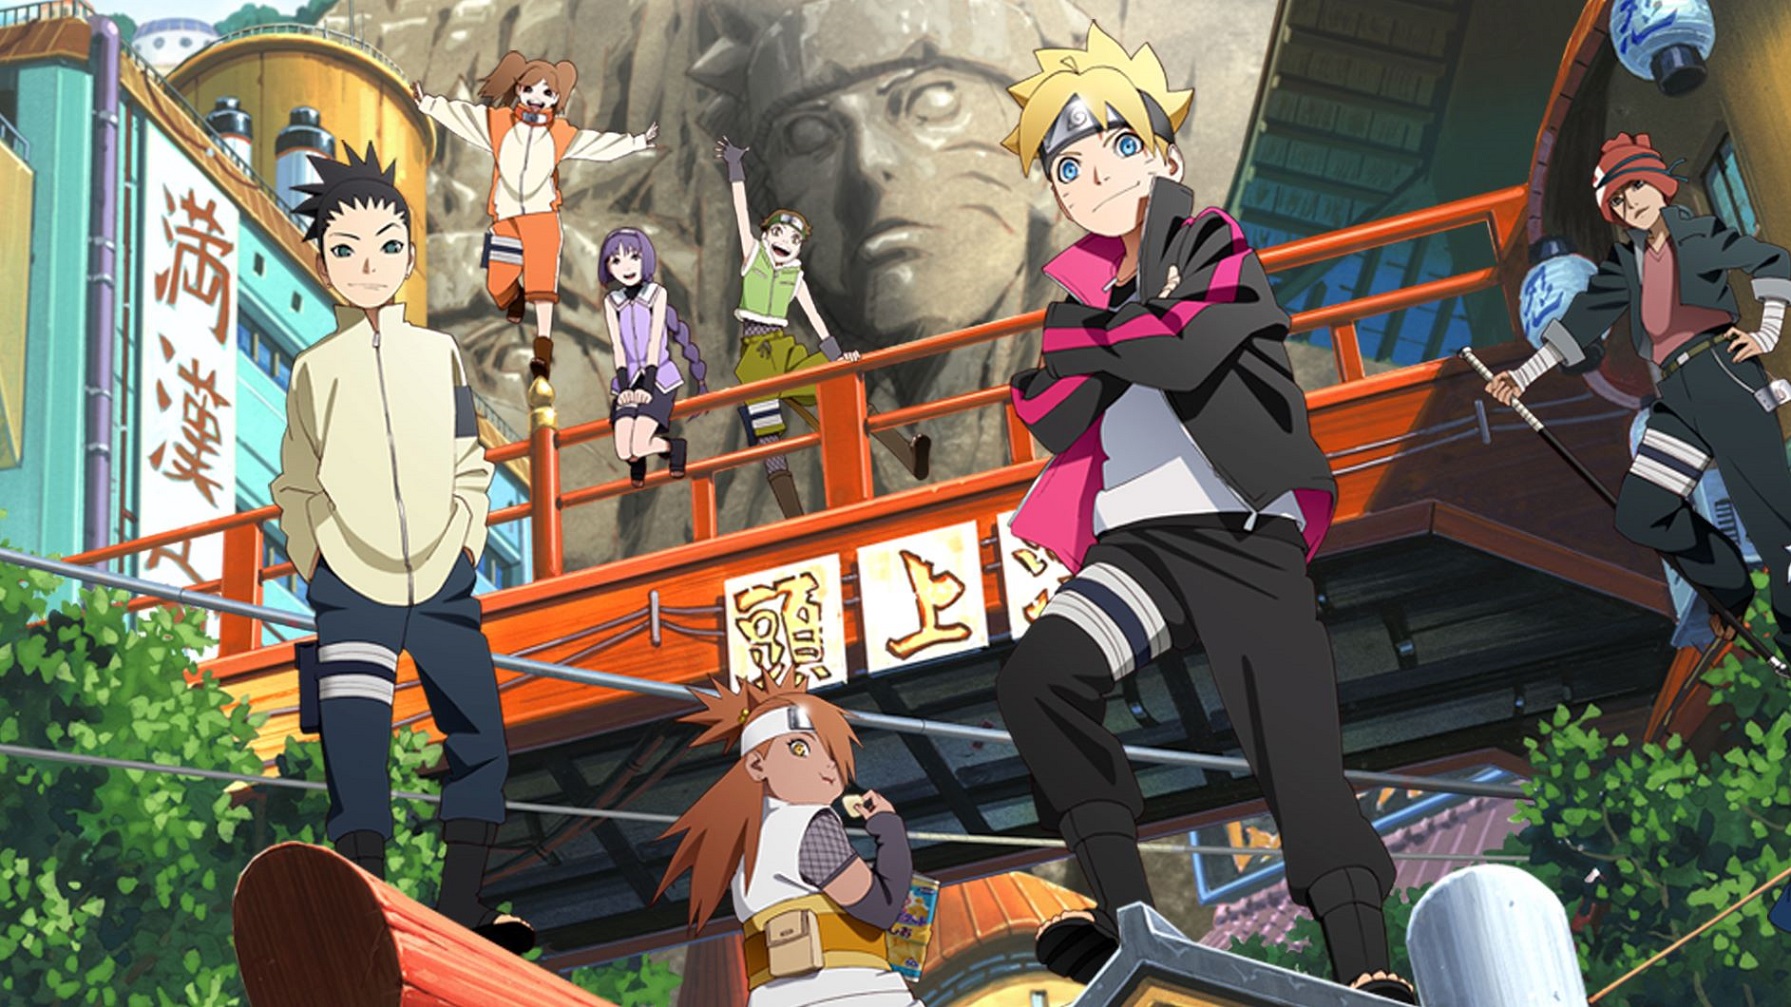 Boruto: Naruto Next Generations ซีซัน1 เตรียมเข้า NETFLIX 1 ก.ค. นี้